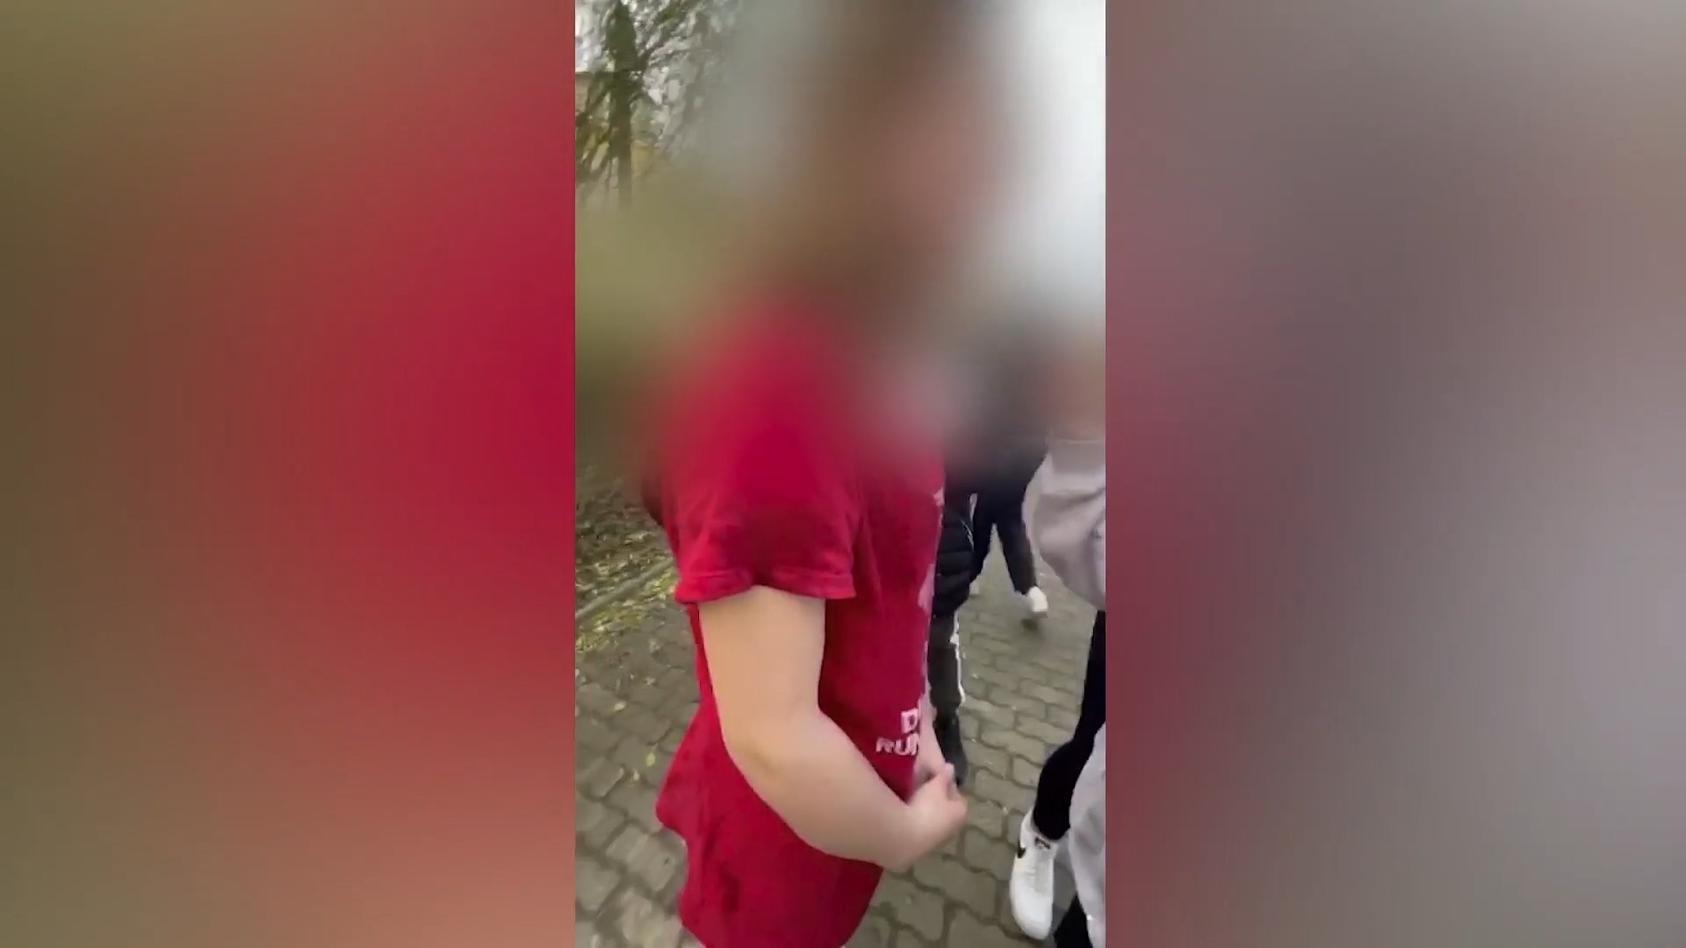 Mädchengruppe foltert 13-Jährige über Stunden Brutales Video zeigt Gewalttat in Heide